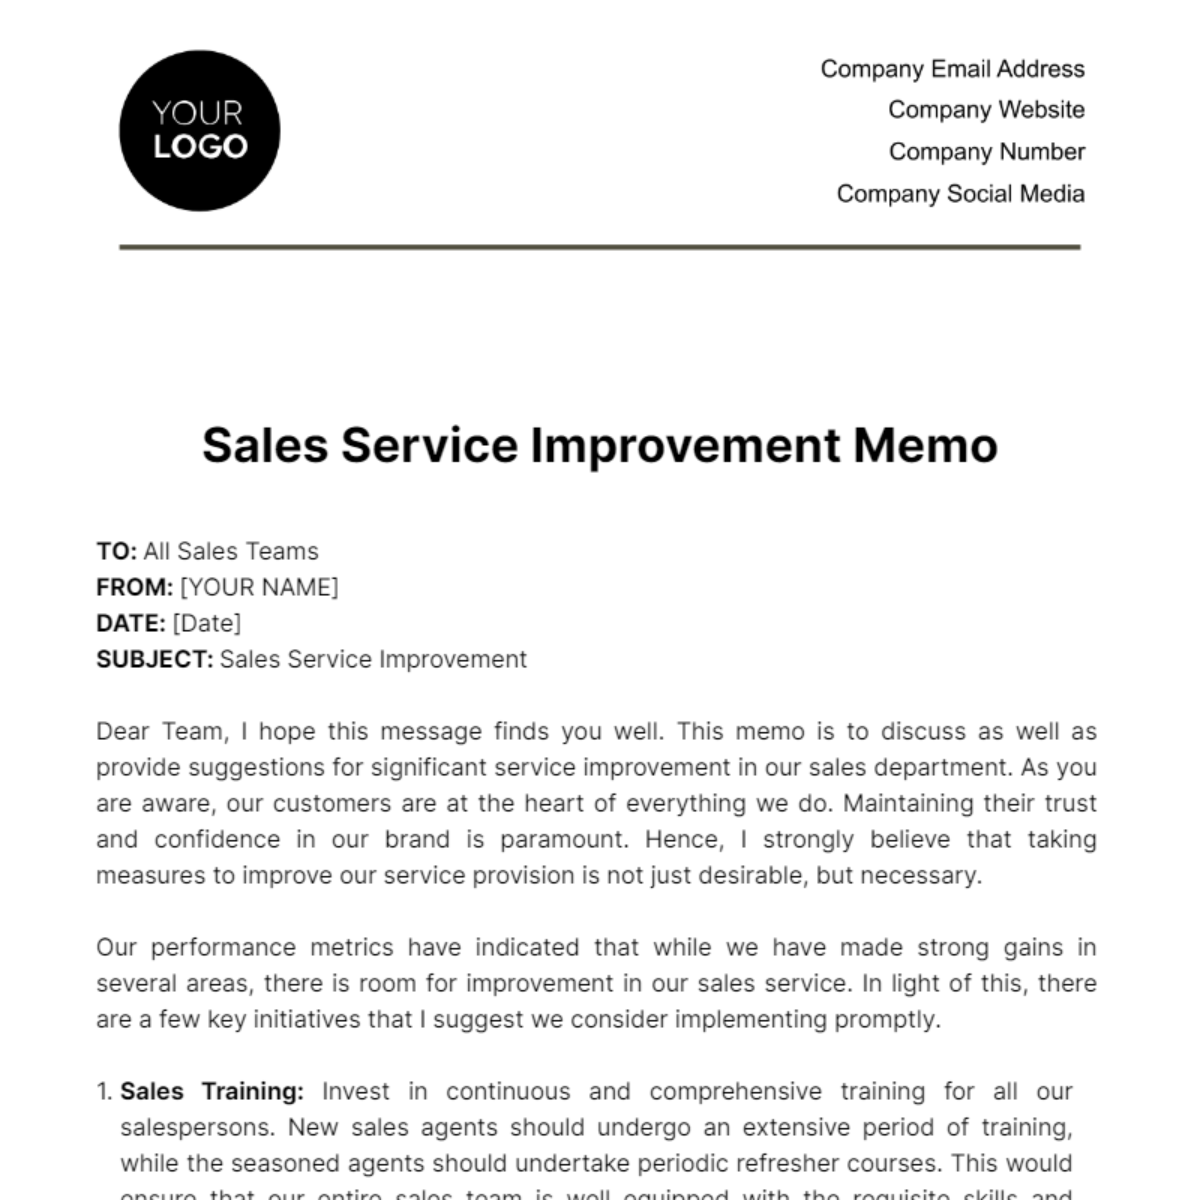 Free Sales Service Improvement Memo Template